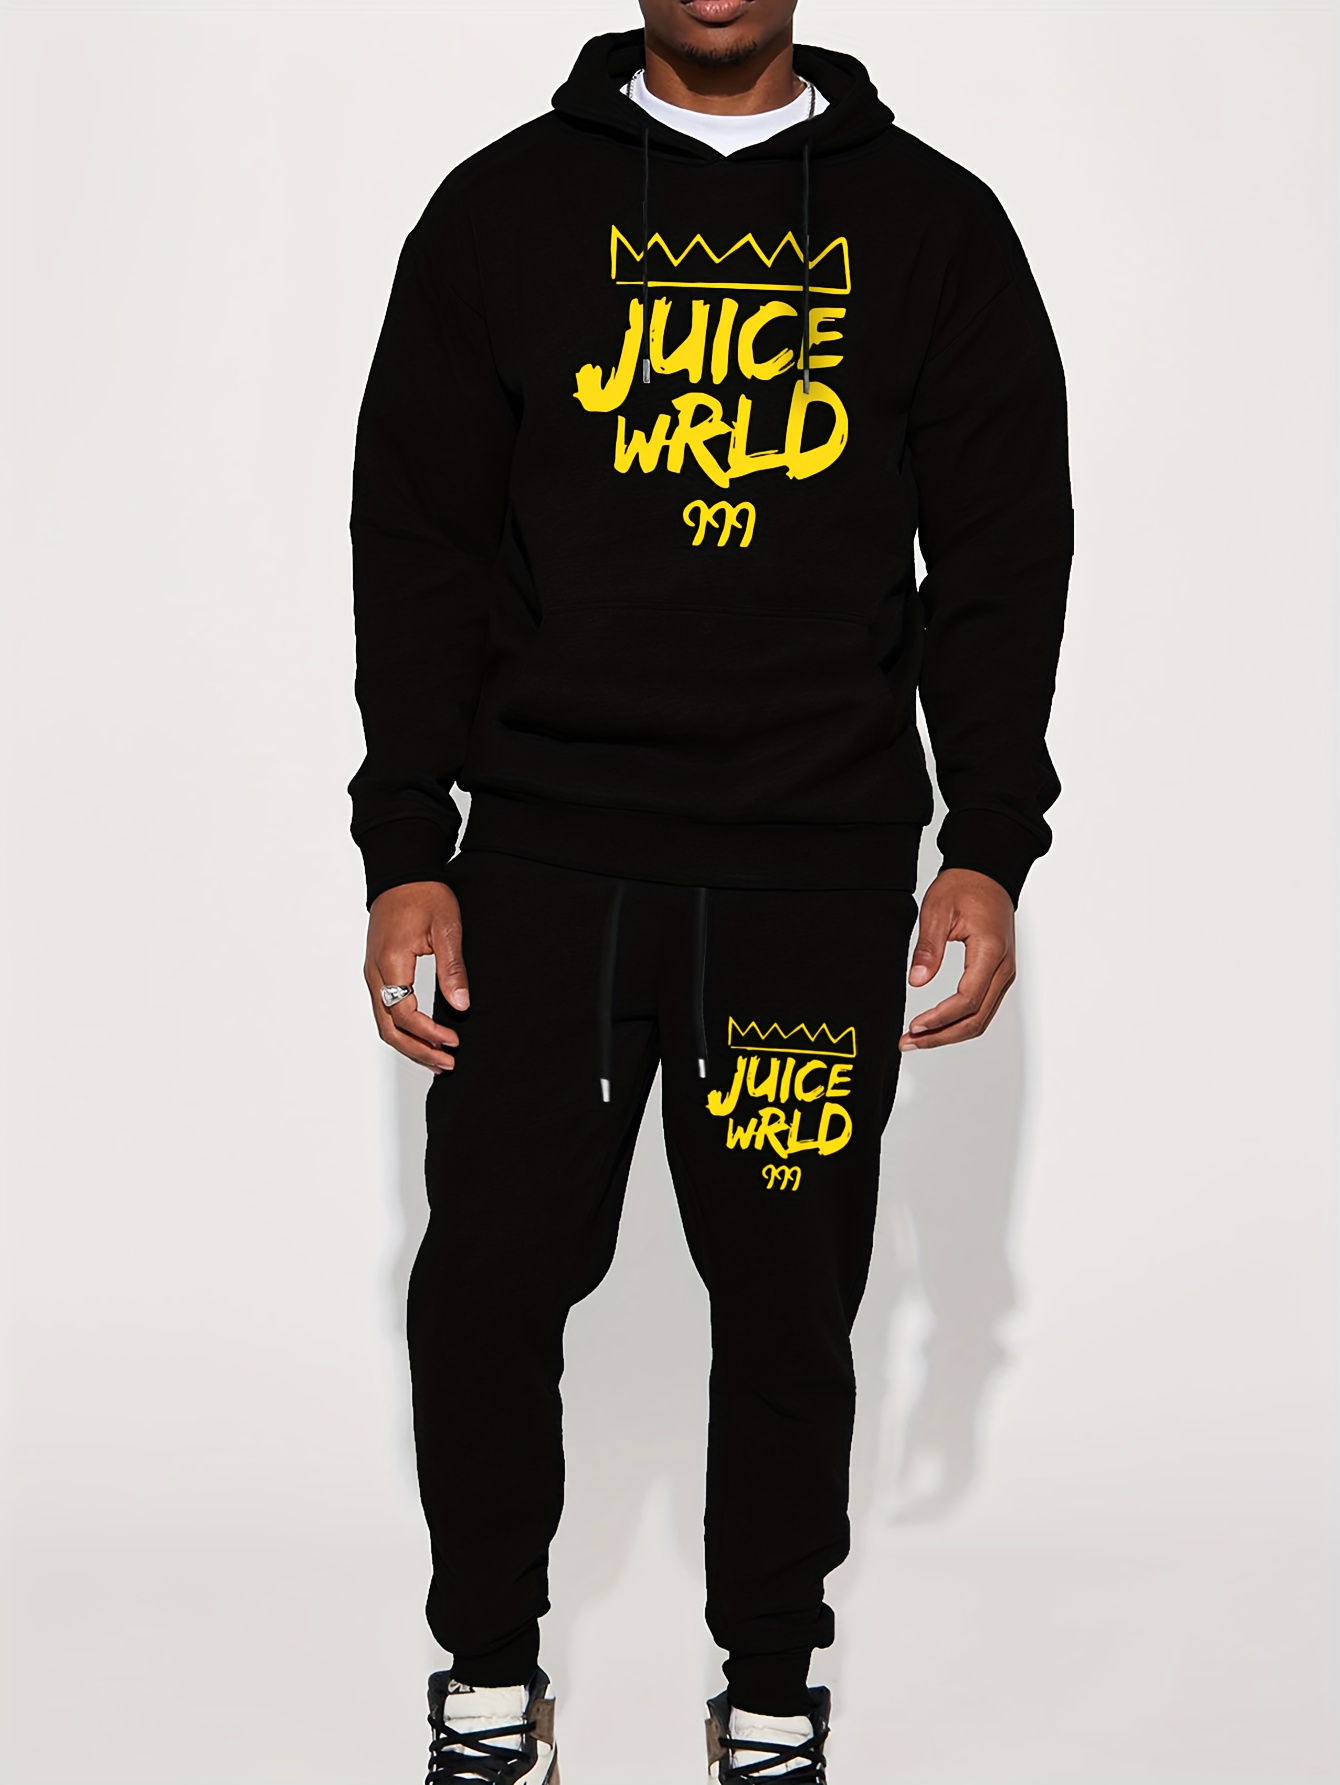 Juice Wrld 3D Fashion Style Cartoon Fashion and Cool Clothes Good Quality  Printing Women/men Hoodies and Sweatshirts